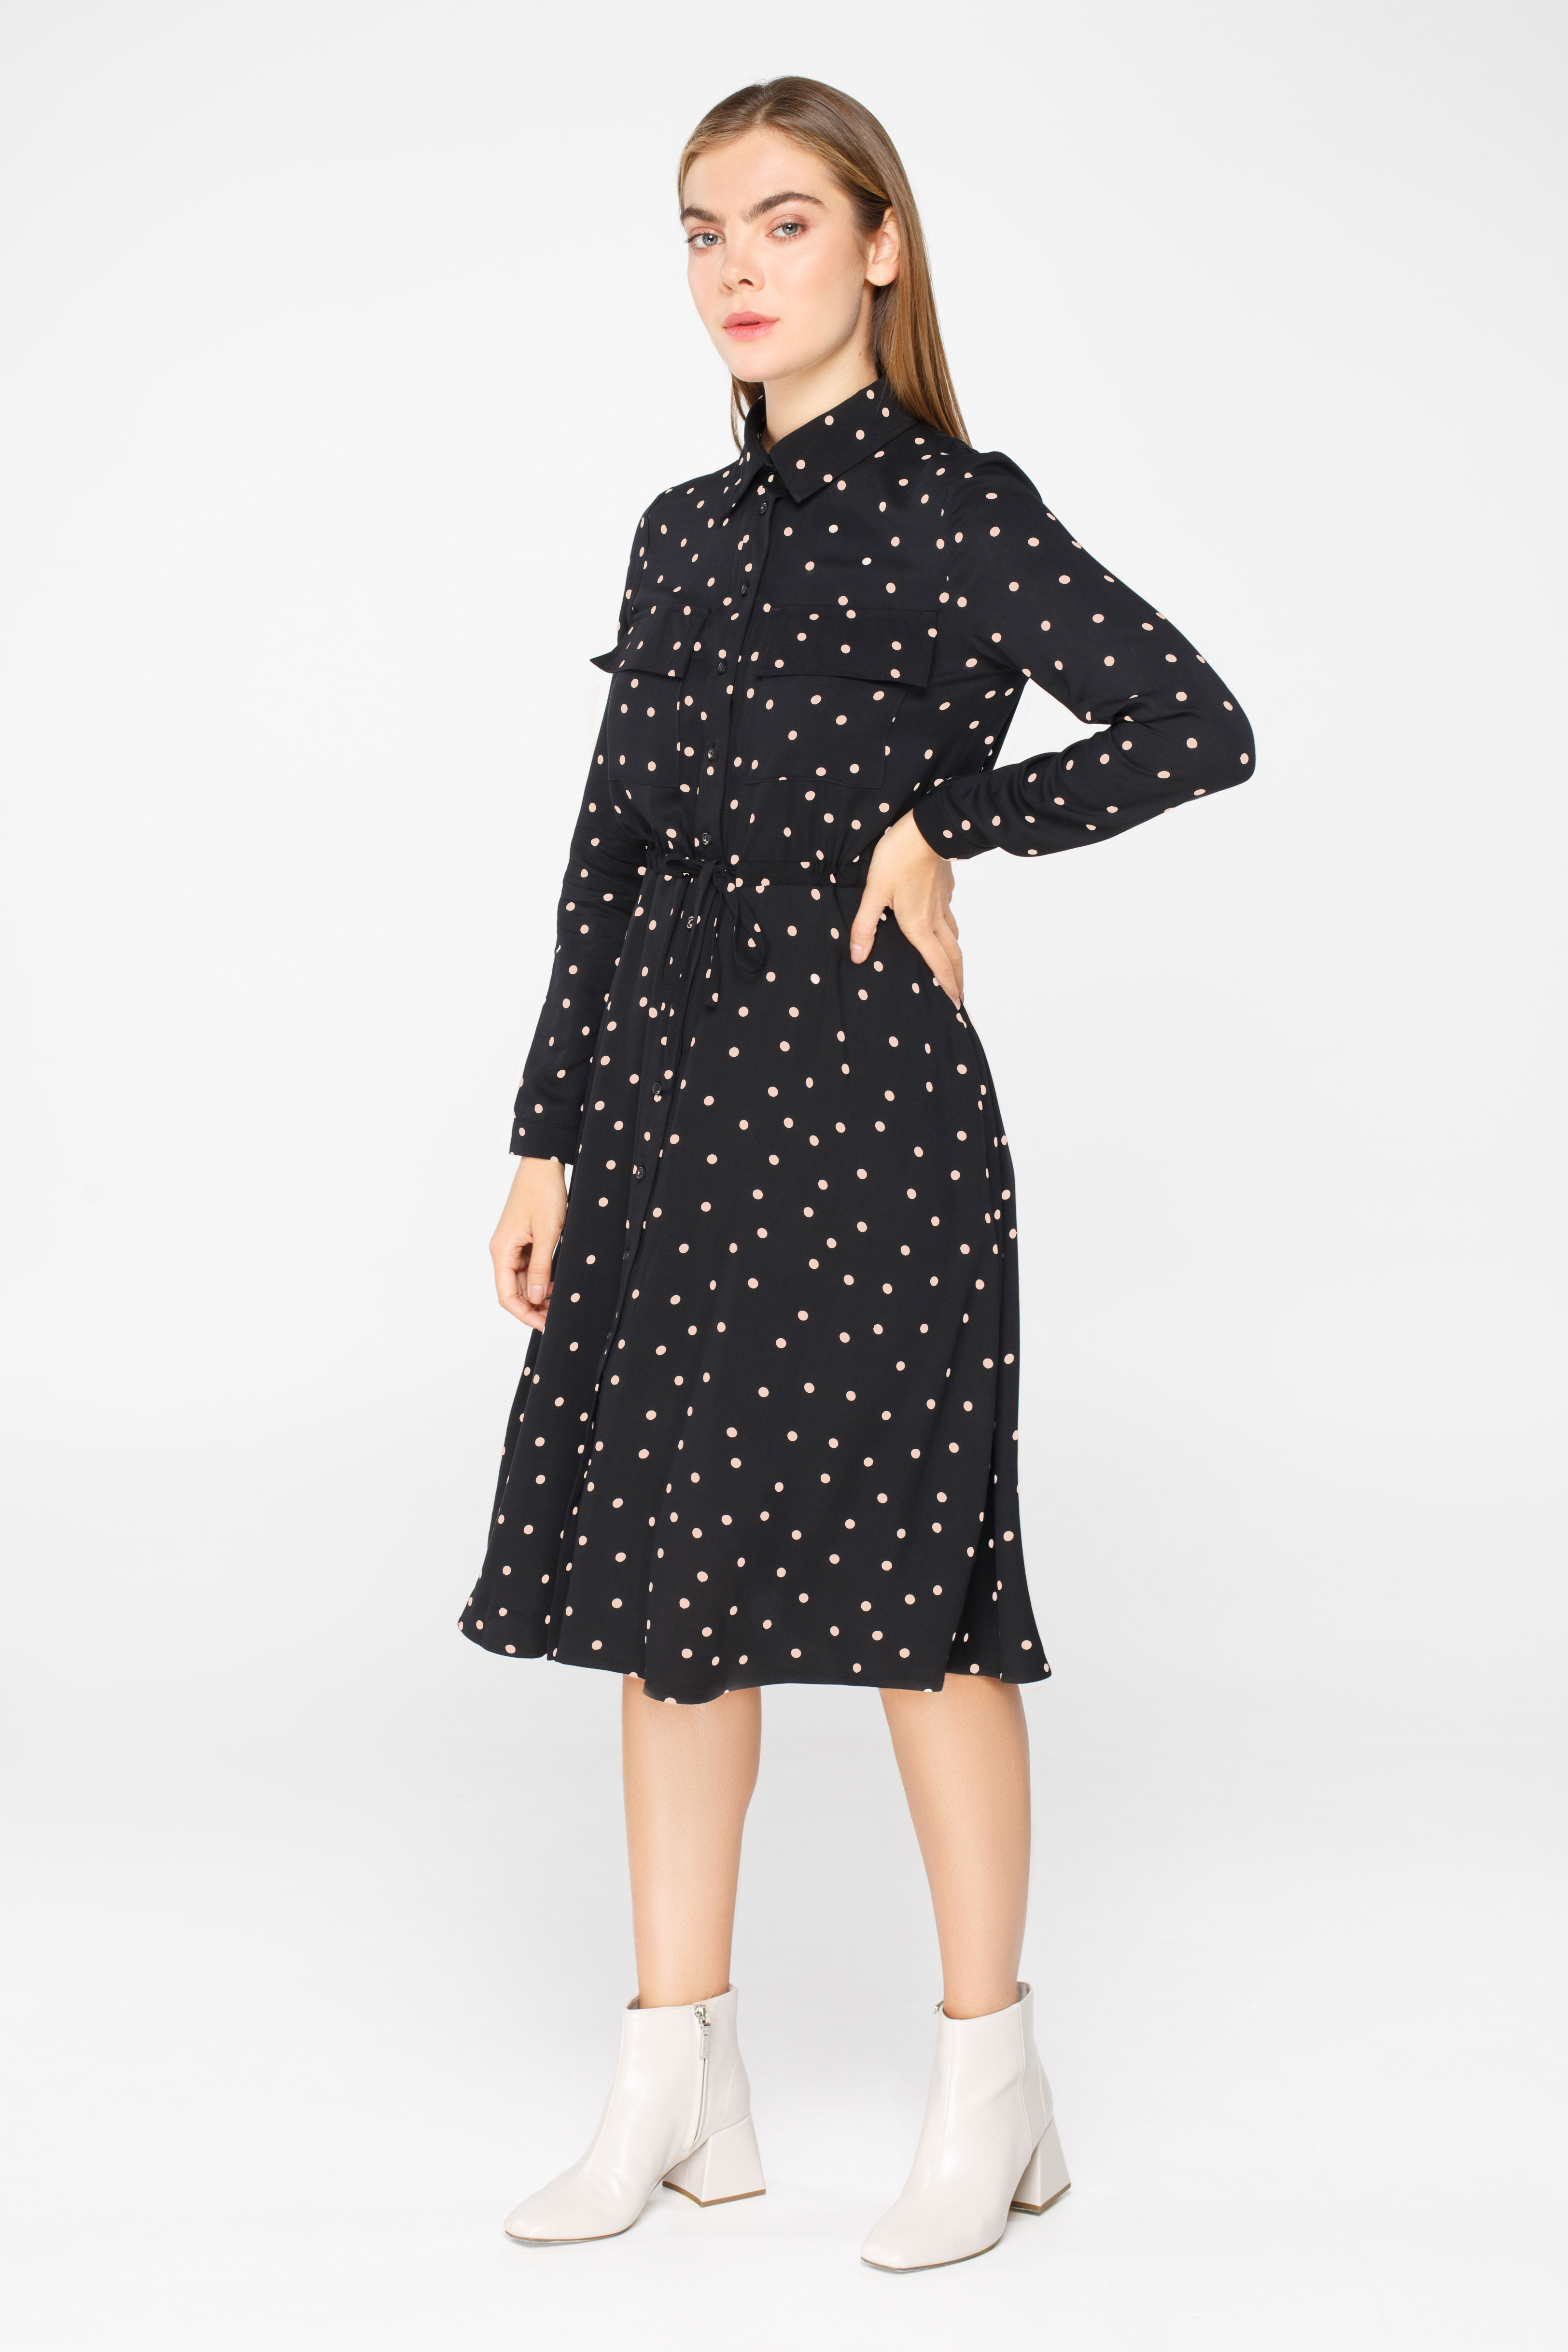 Black polka dot shirt dress below the knee, photo 4